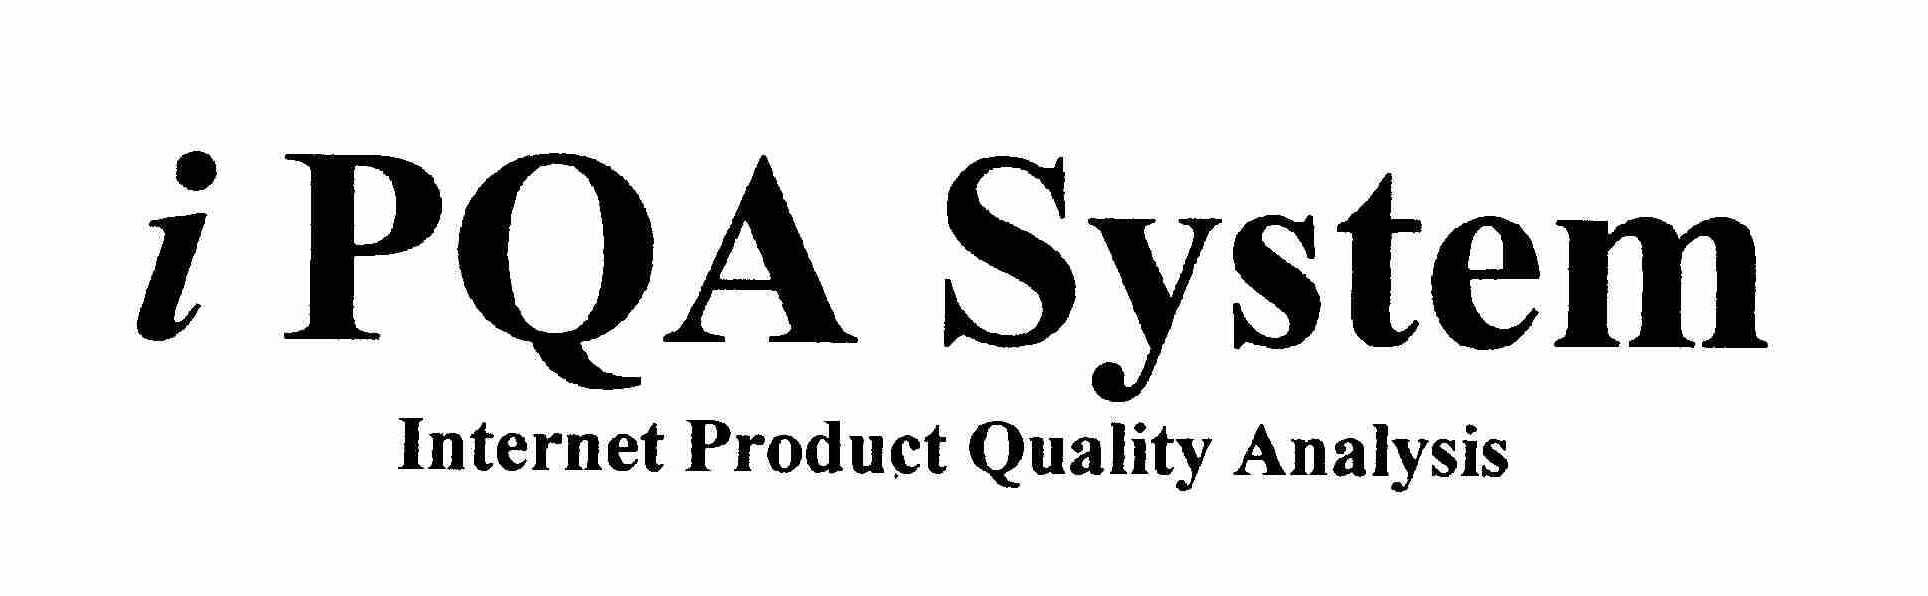  IPQA SYSTEM INTERNET PRODUCT QUALITY ANALYSIS